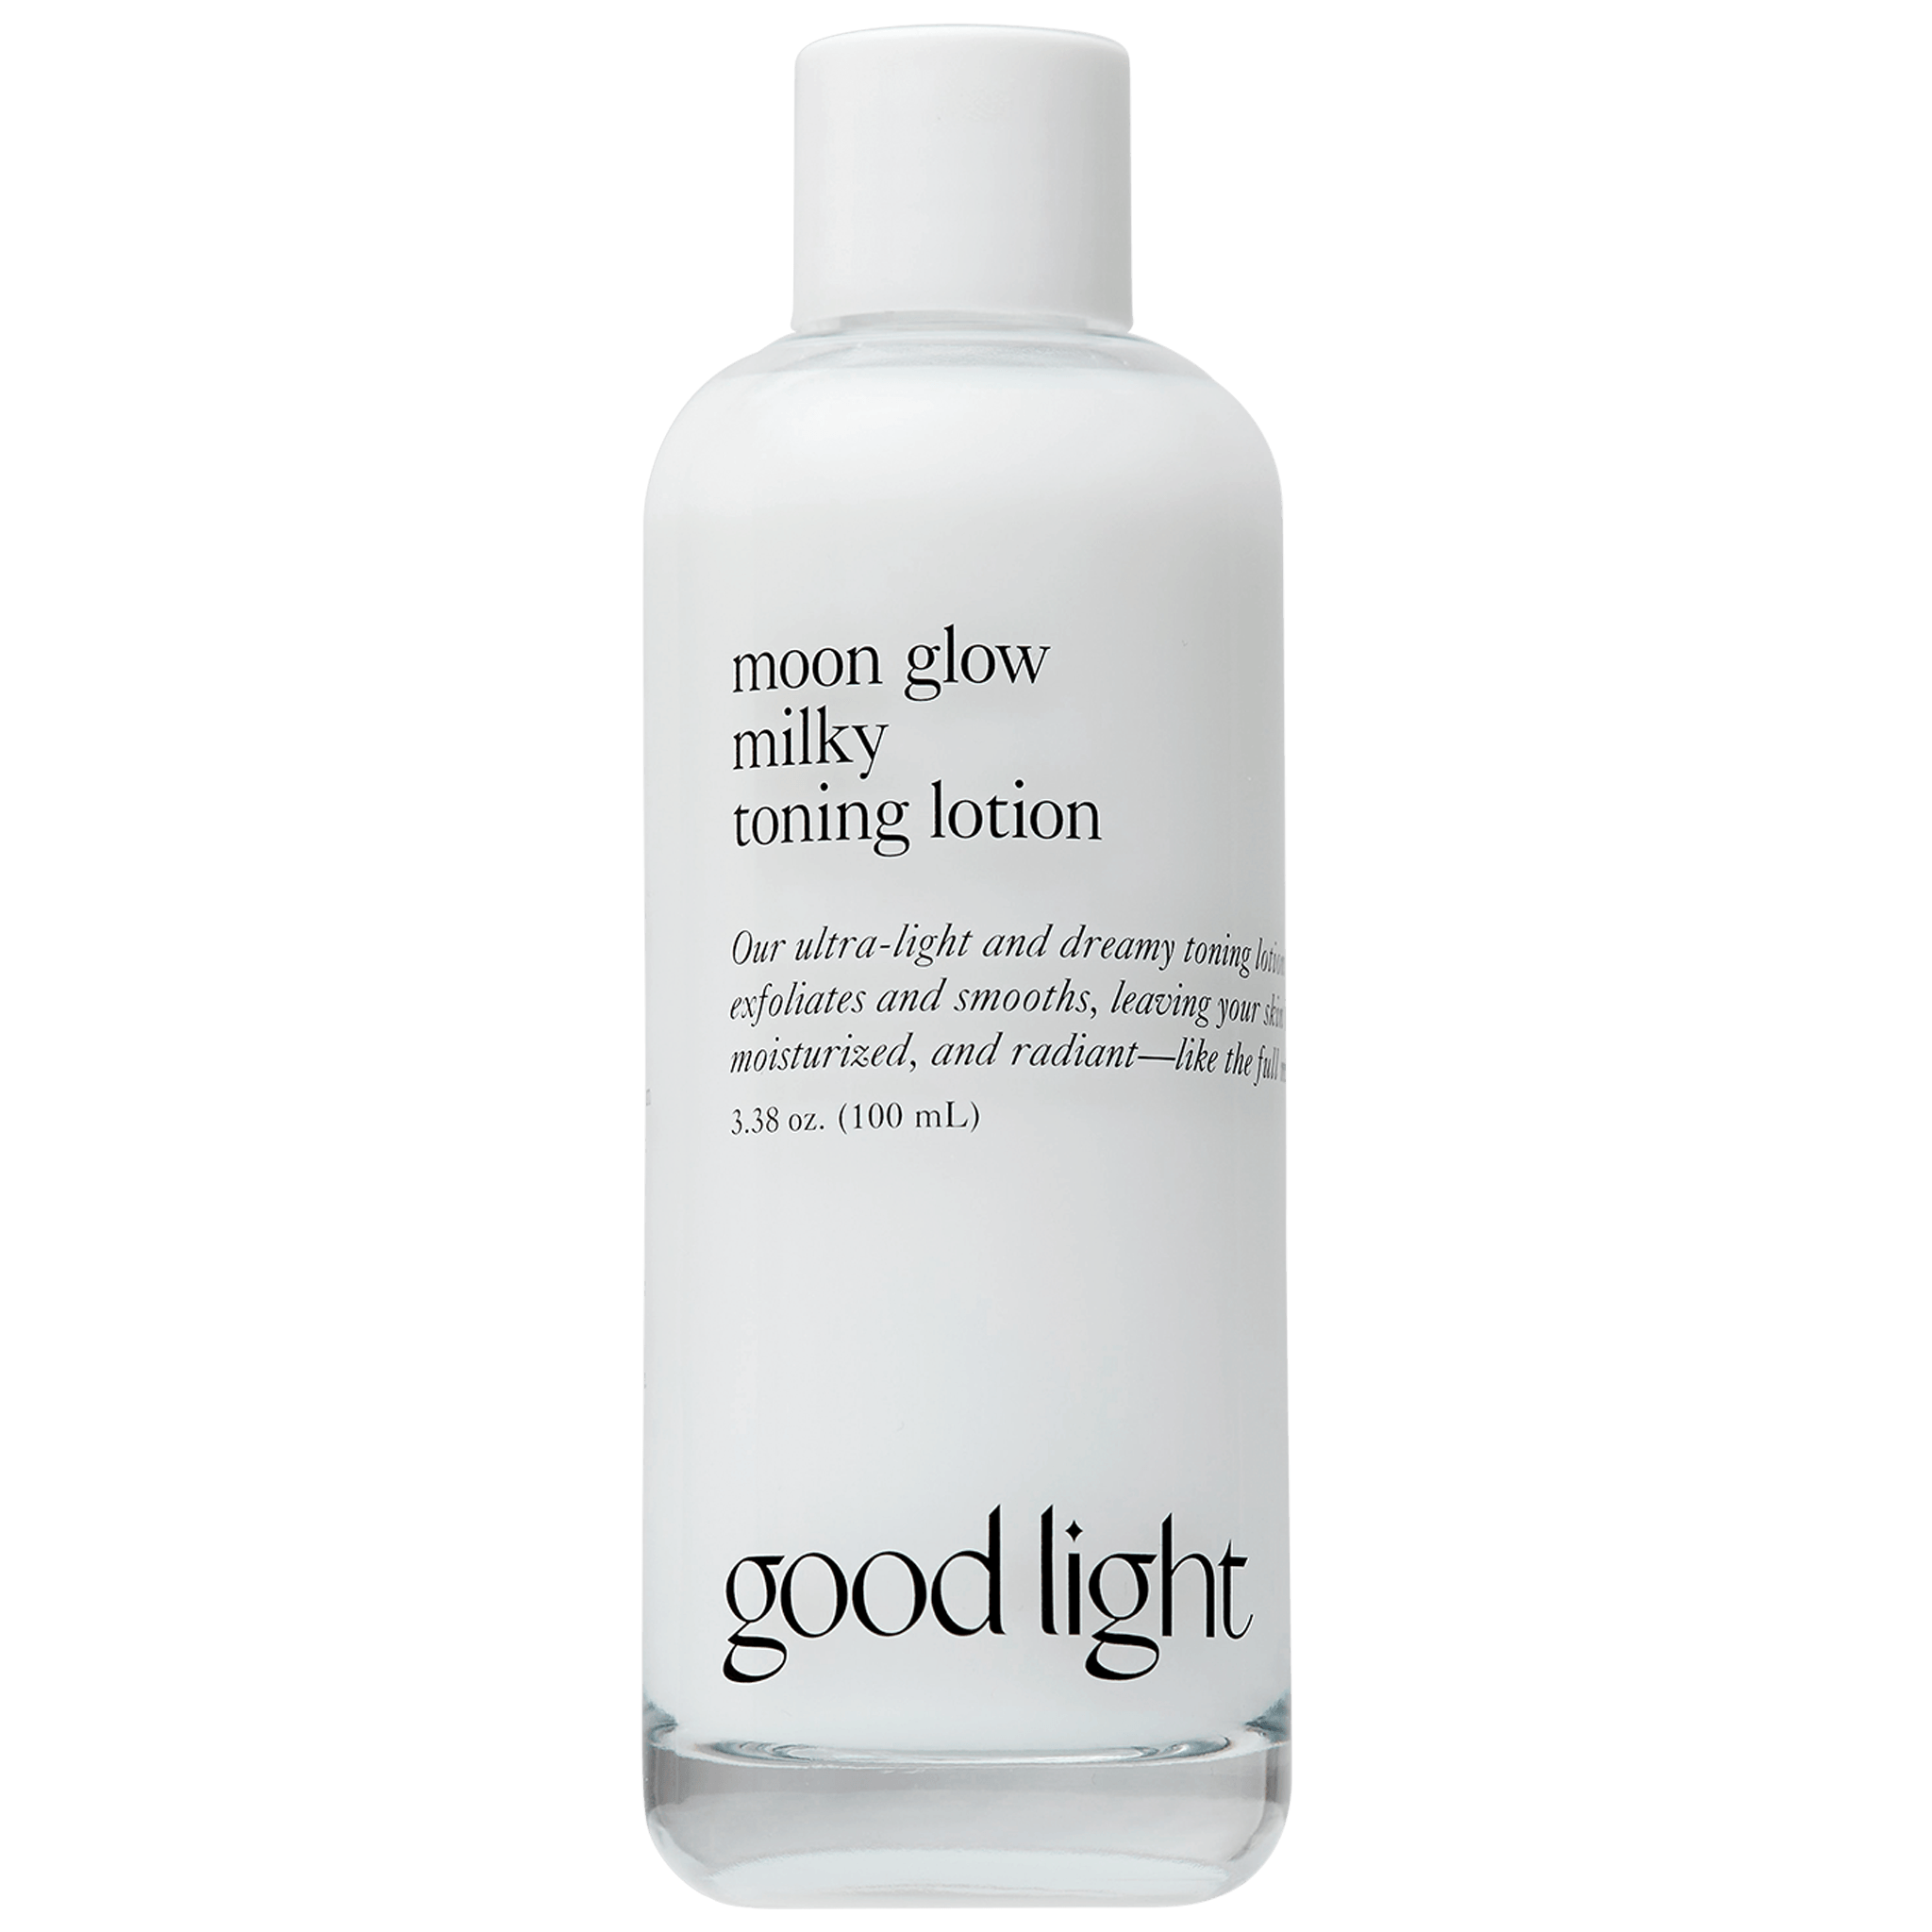 Moon Glow Milky Toning Lotion - good light - Consumerhaus